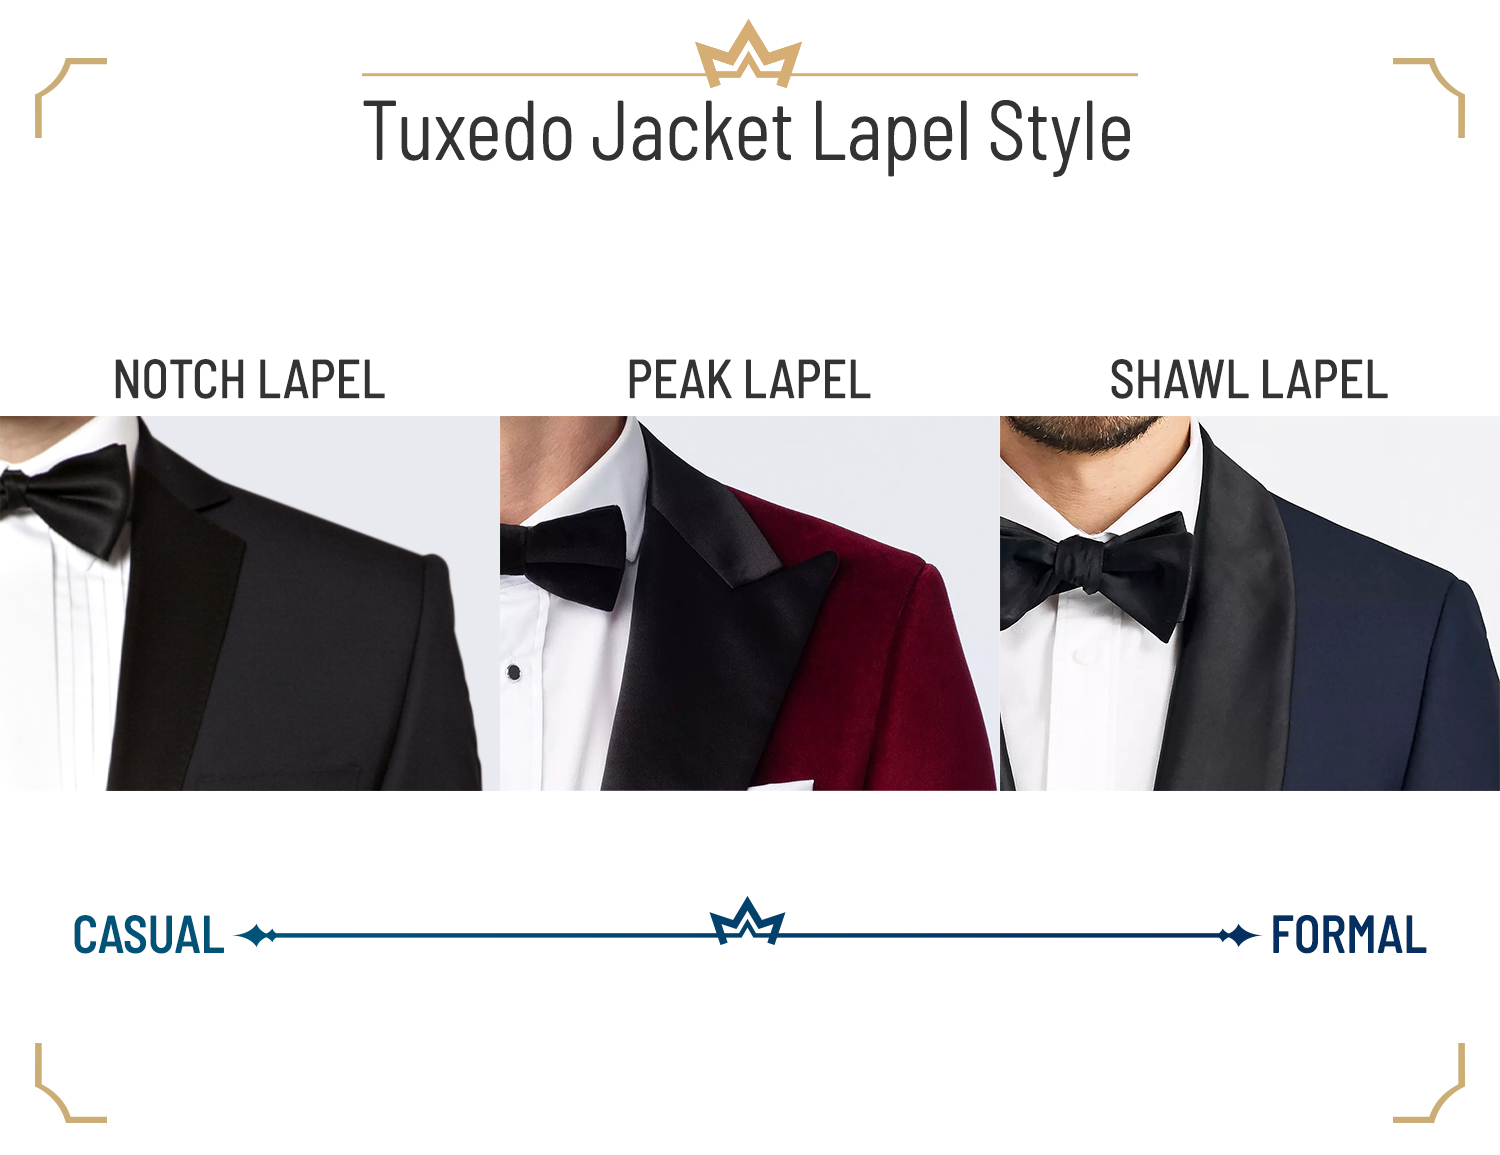 Different tuxedo jacket lapel styles